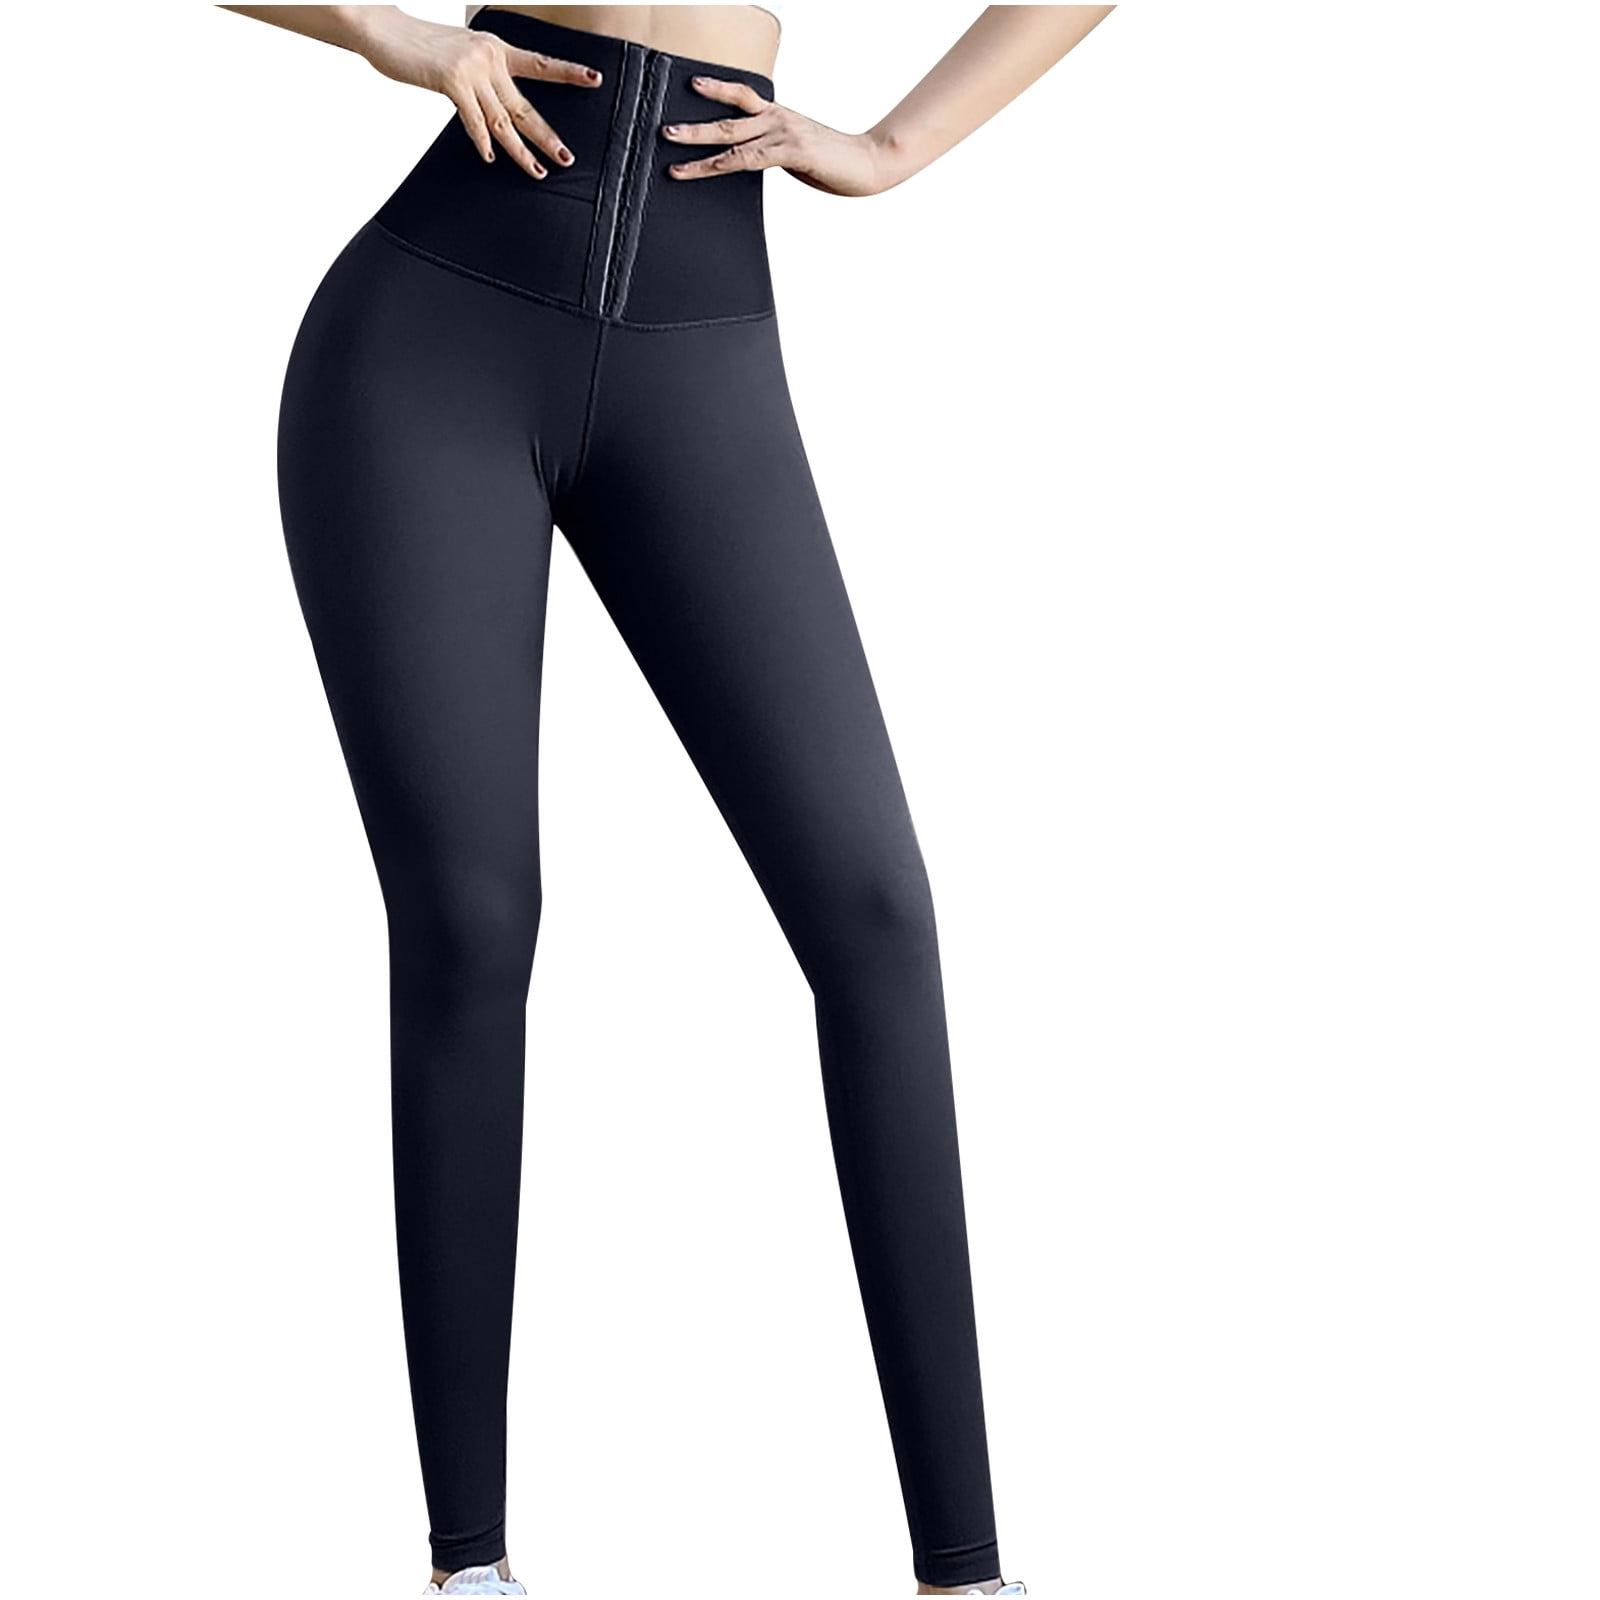  LANREN Women Elastic High Waist Pants Thin Yoga Pants Plus Size  Square Dance Pants Slim Sports Fitness Pants Yoga Pants (Color : Black,  Size : Small) : Clothing, Shoes & Jewelry